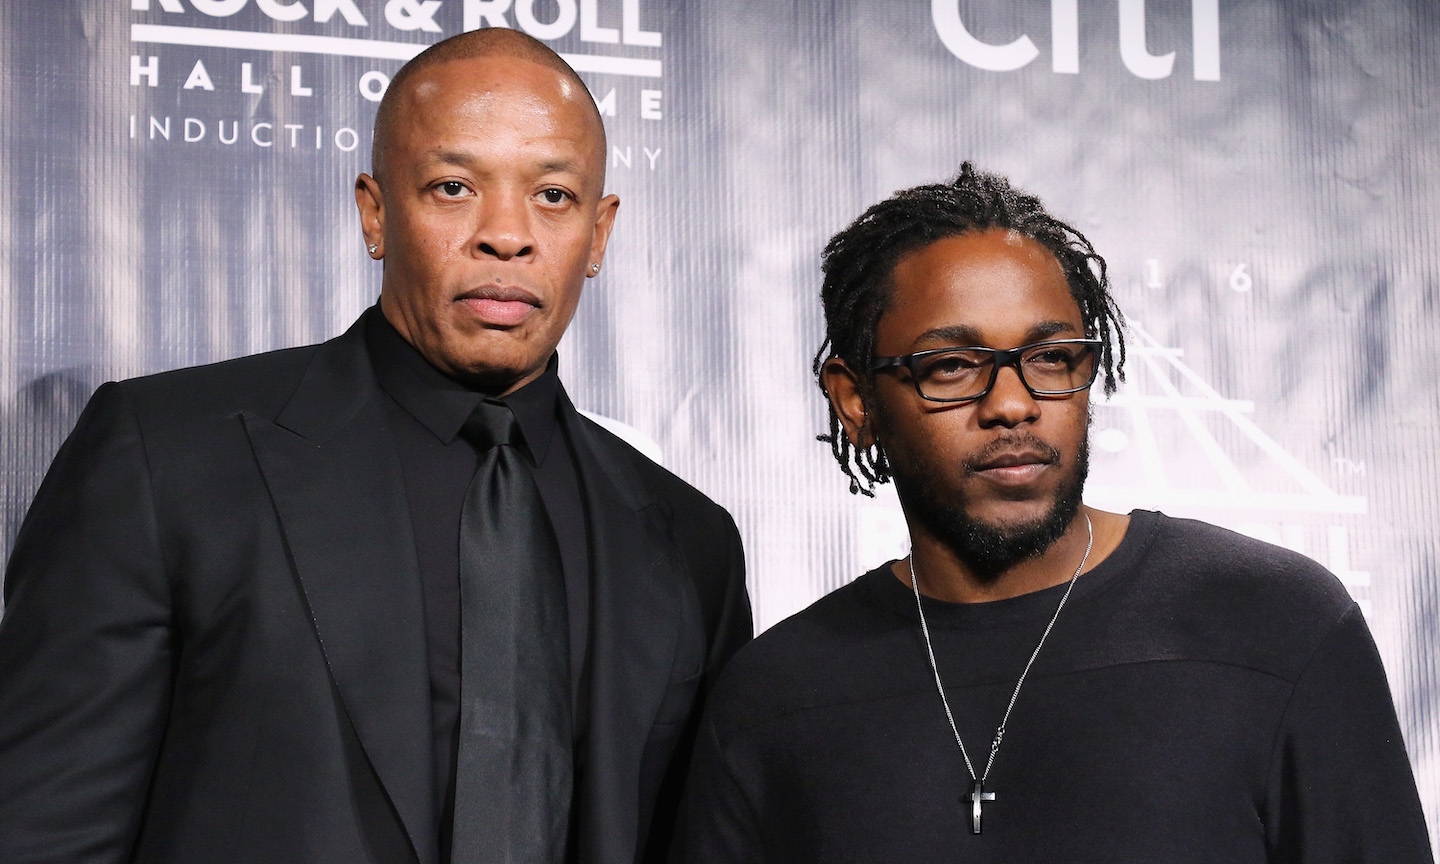 Kendrick Lamar's 'DNA.' Inspires Characters In Ruffles Super Bowl Ad